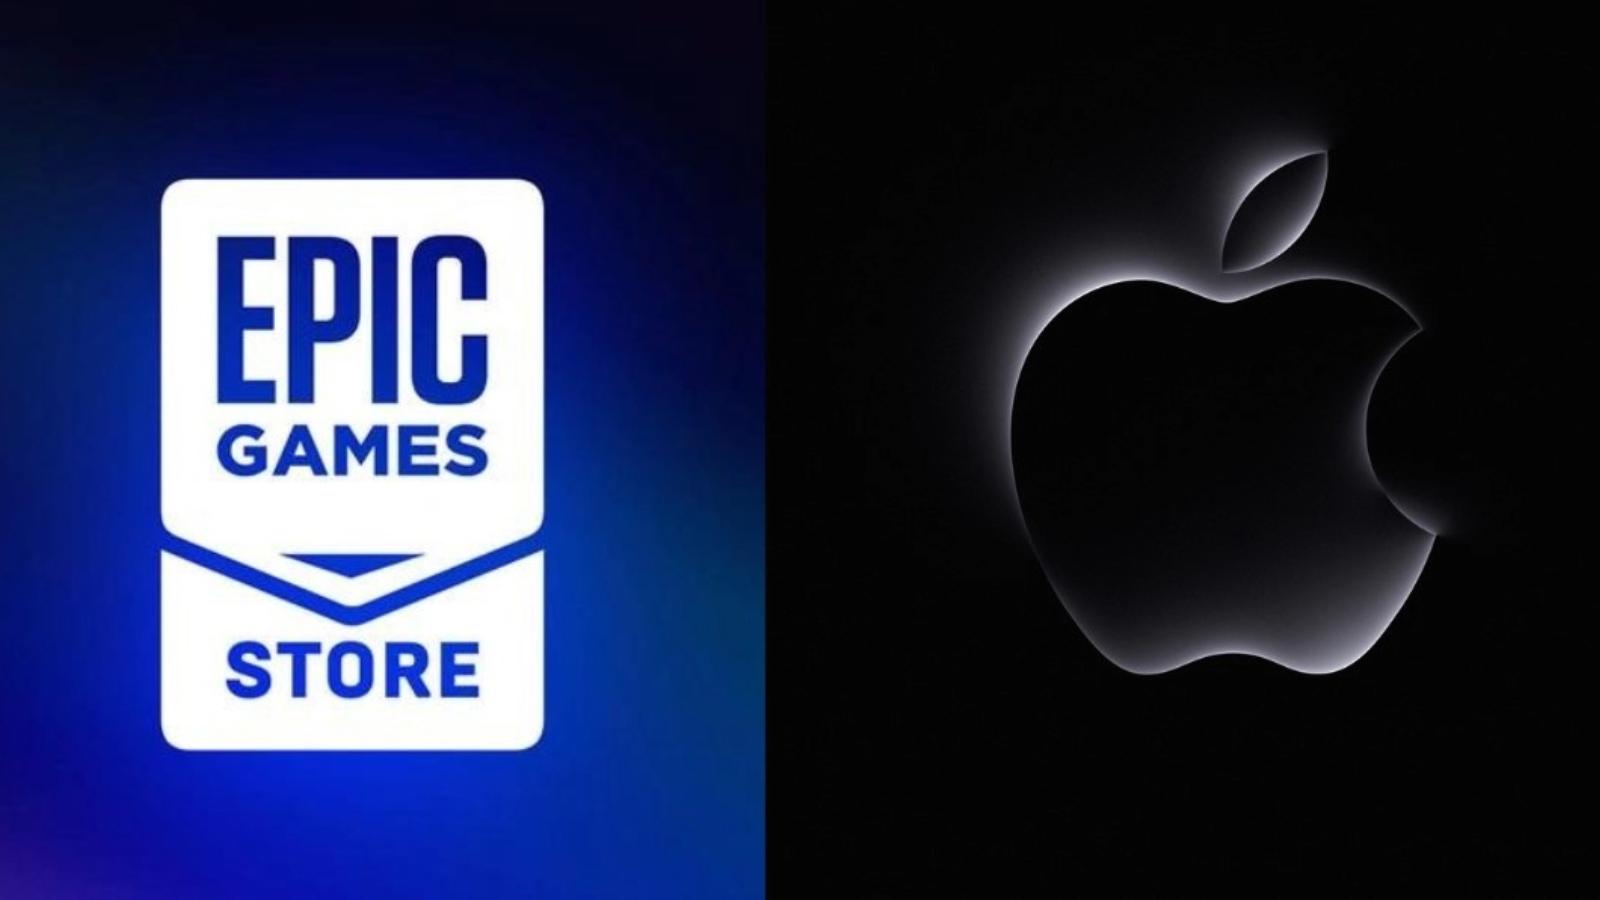 Apple logo next to Epic Games logo